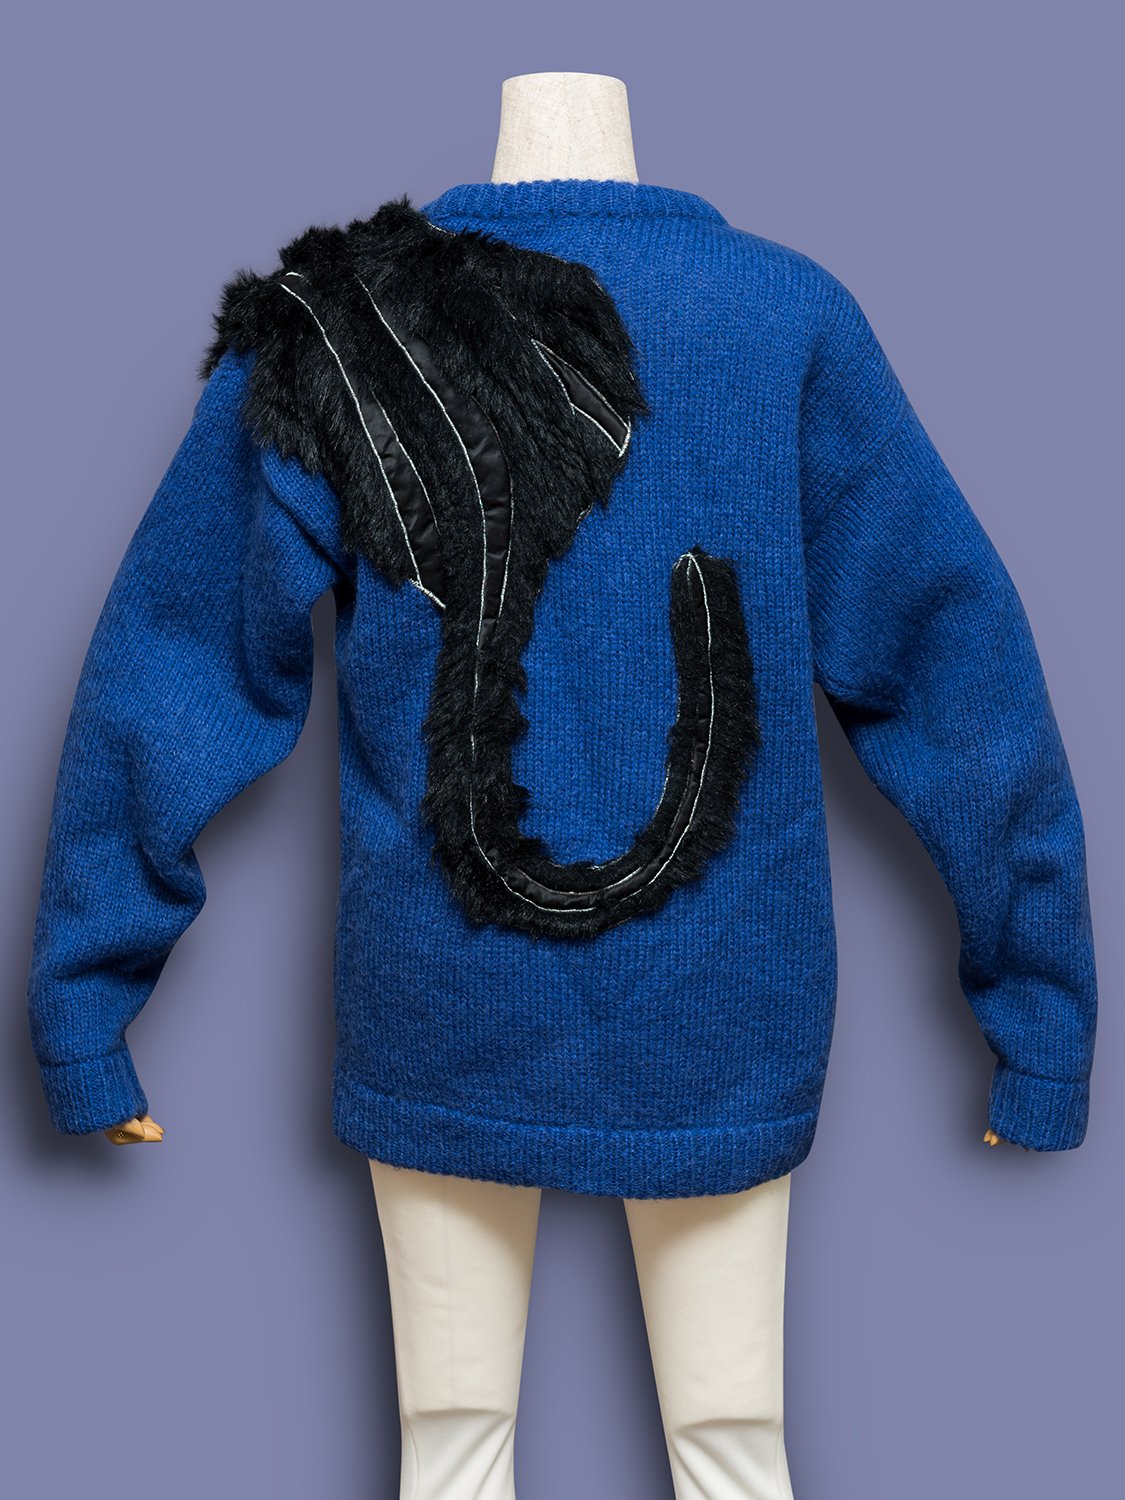 Kansai Yamamoto Cobalt Blue Knit Sweater with Black Panther Appliqué, –  Pechuga Vintage